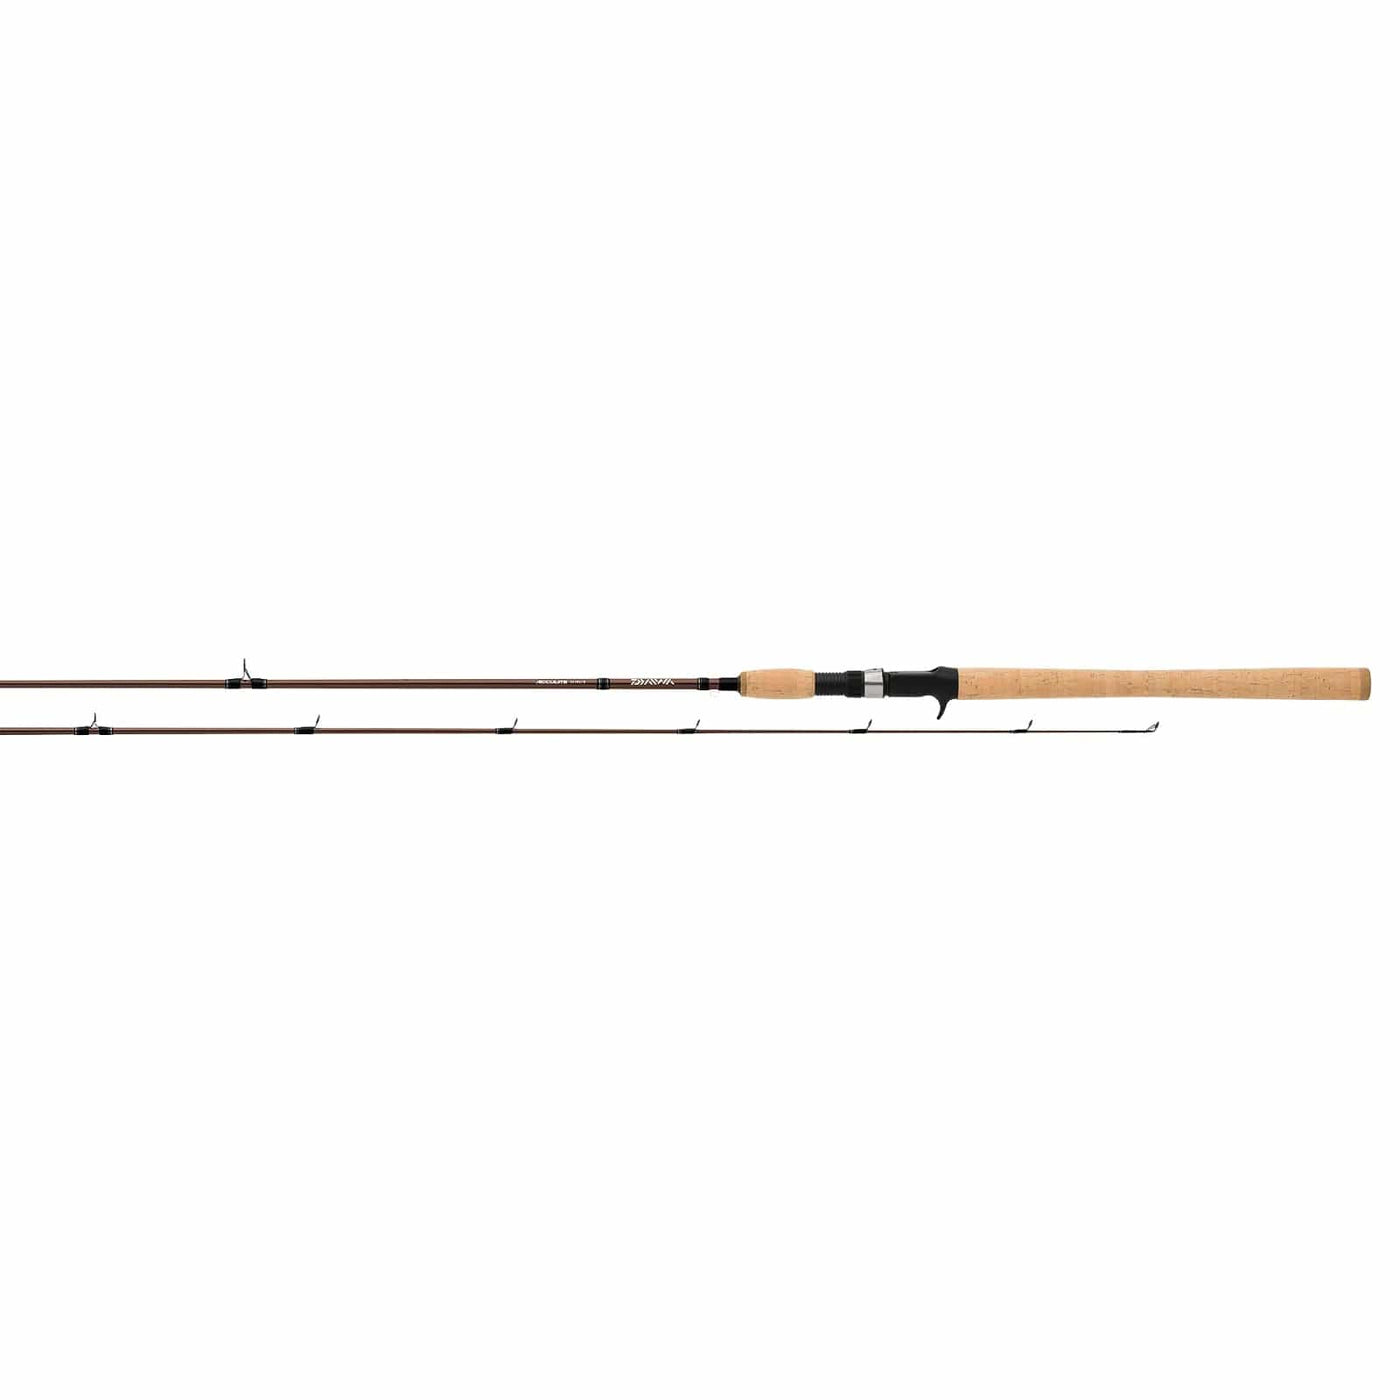 Daiwa Daiwa Acculite Spinning Rod ACLT962LRS 9 ft 6 in 2 pc Fishing